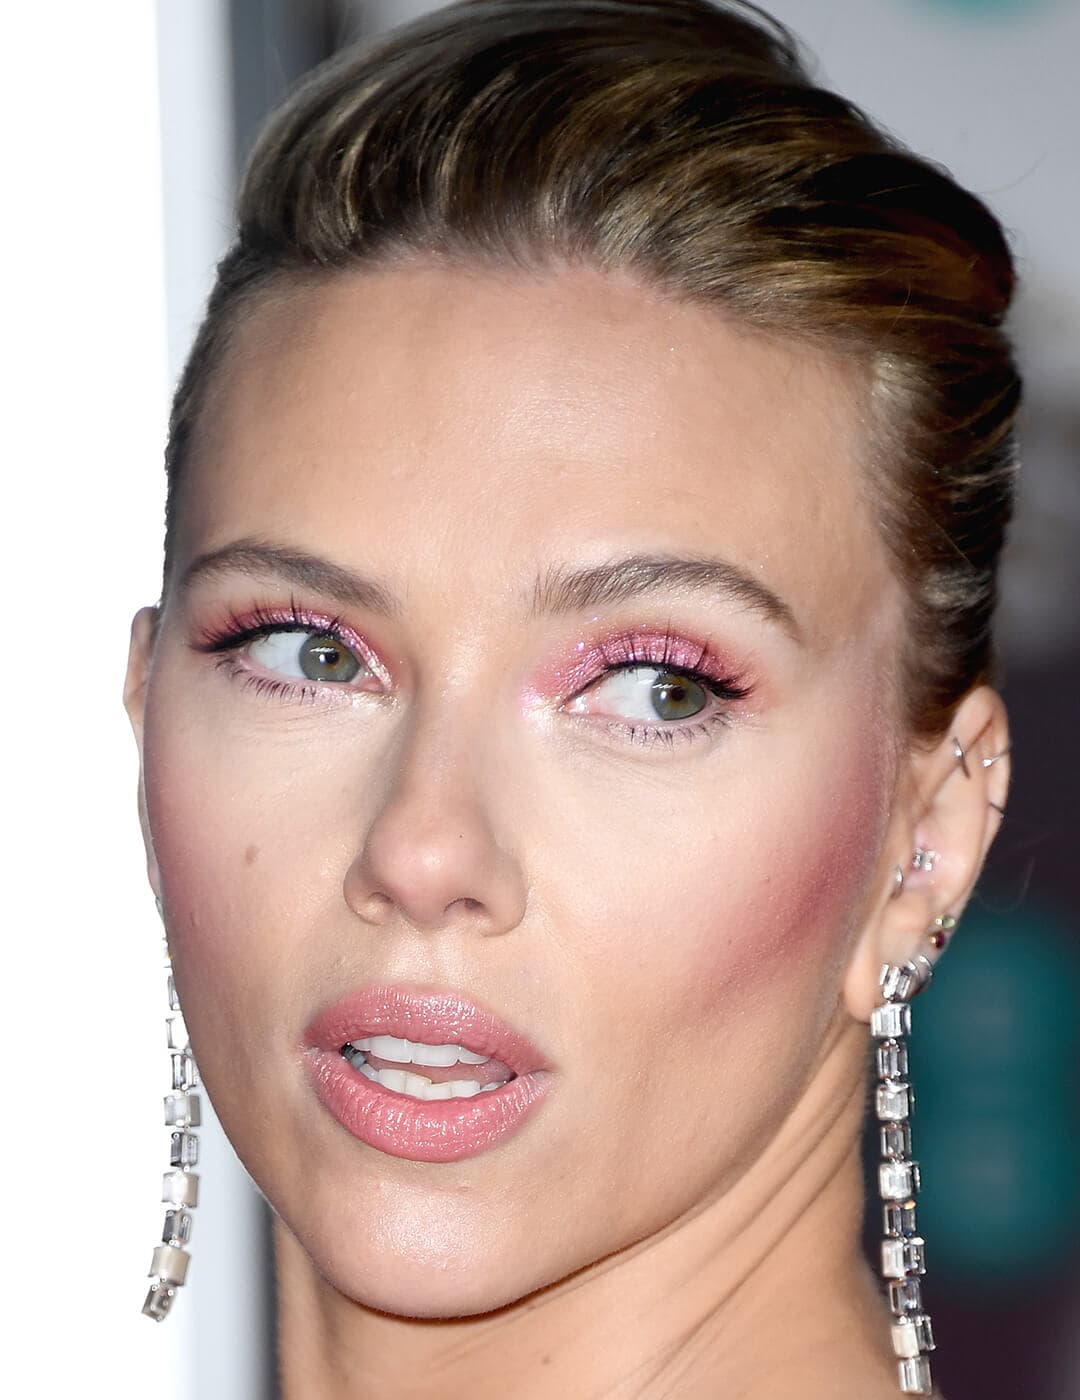 A photo of Scarlett Johansson with pink eyeshadow